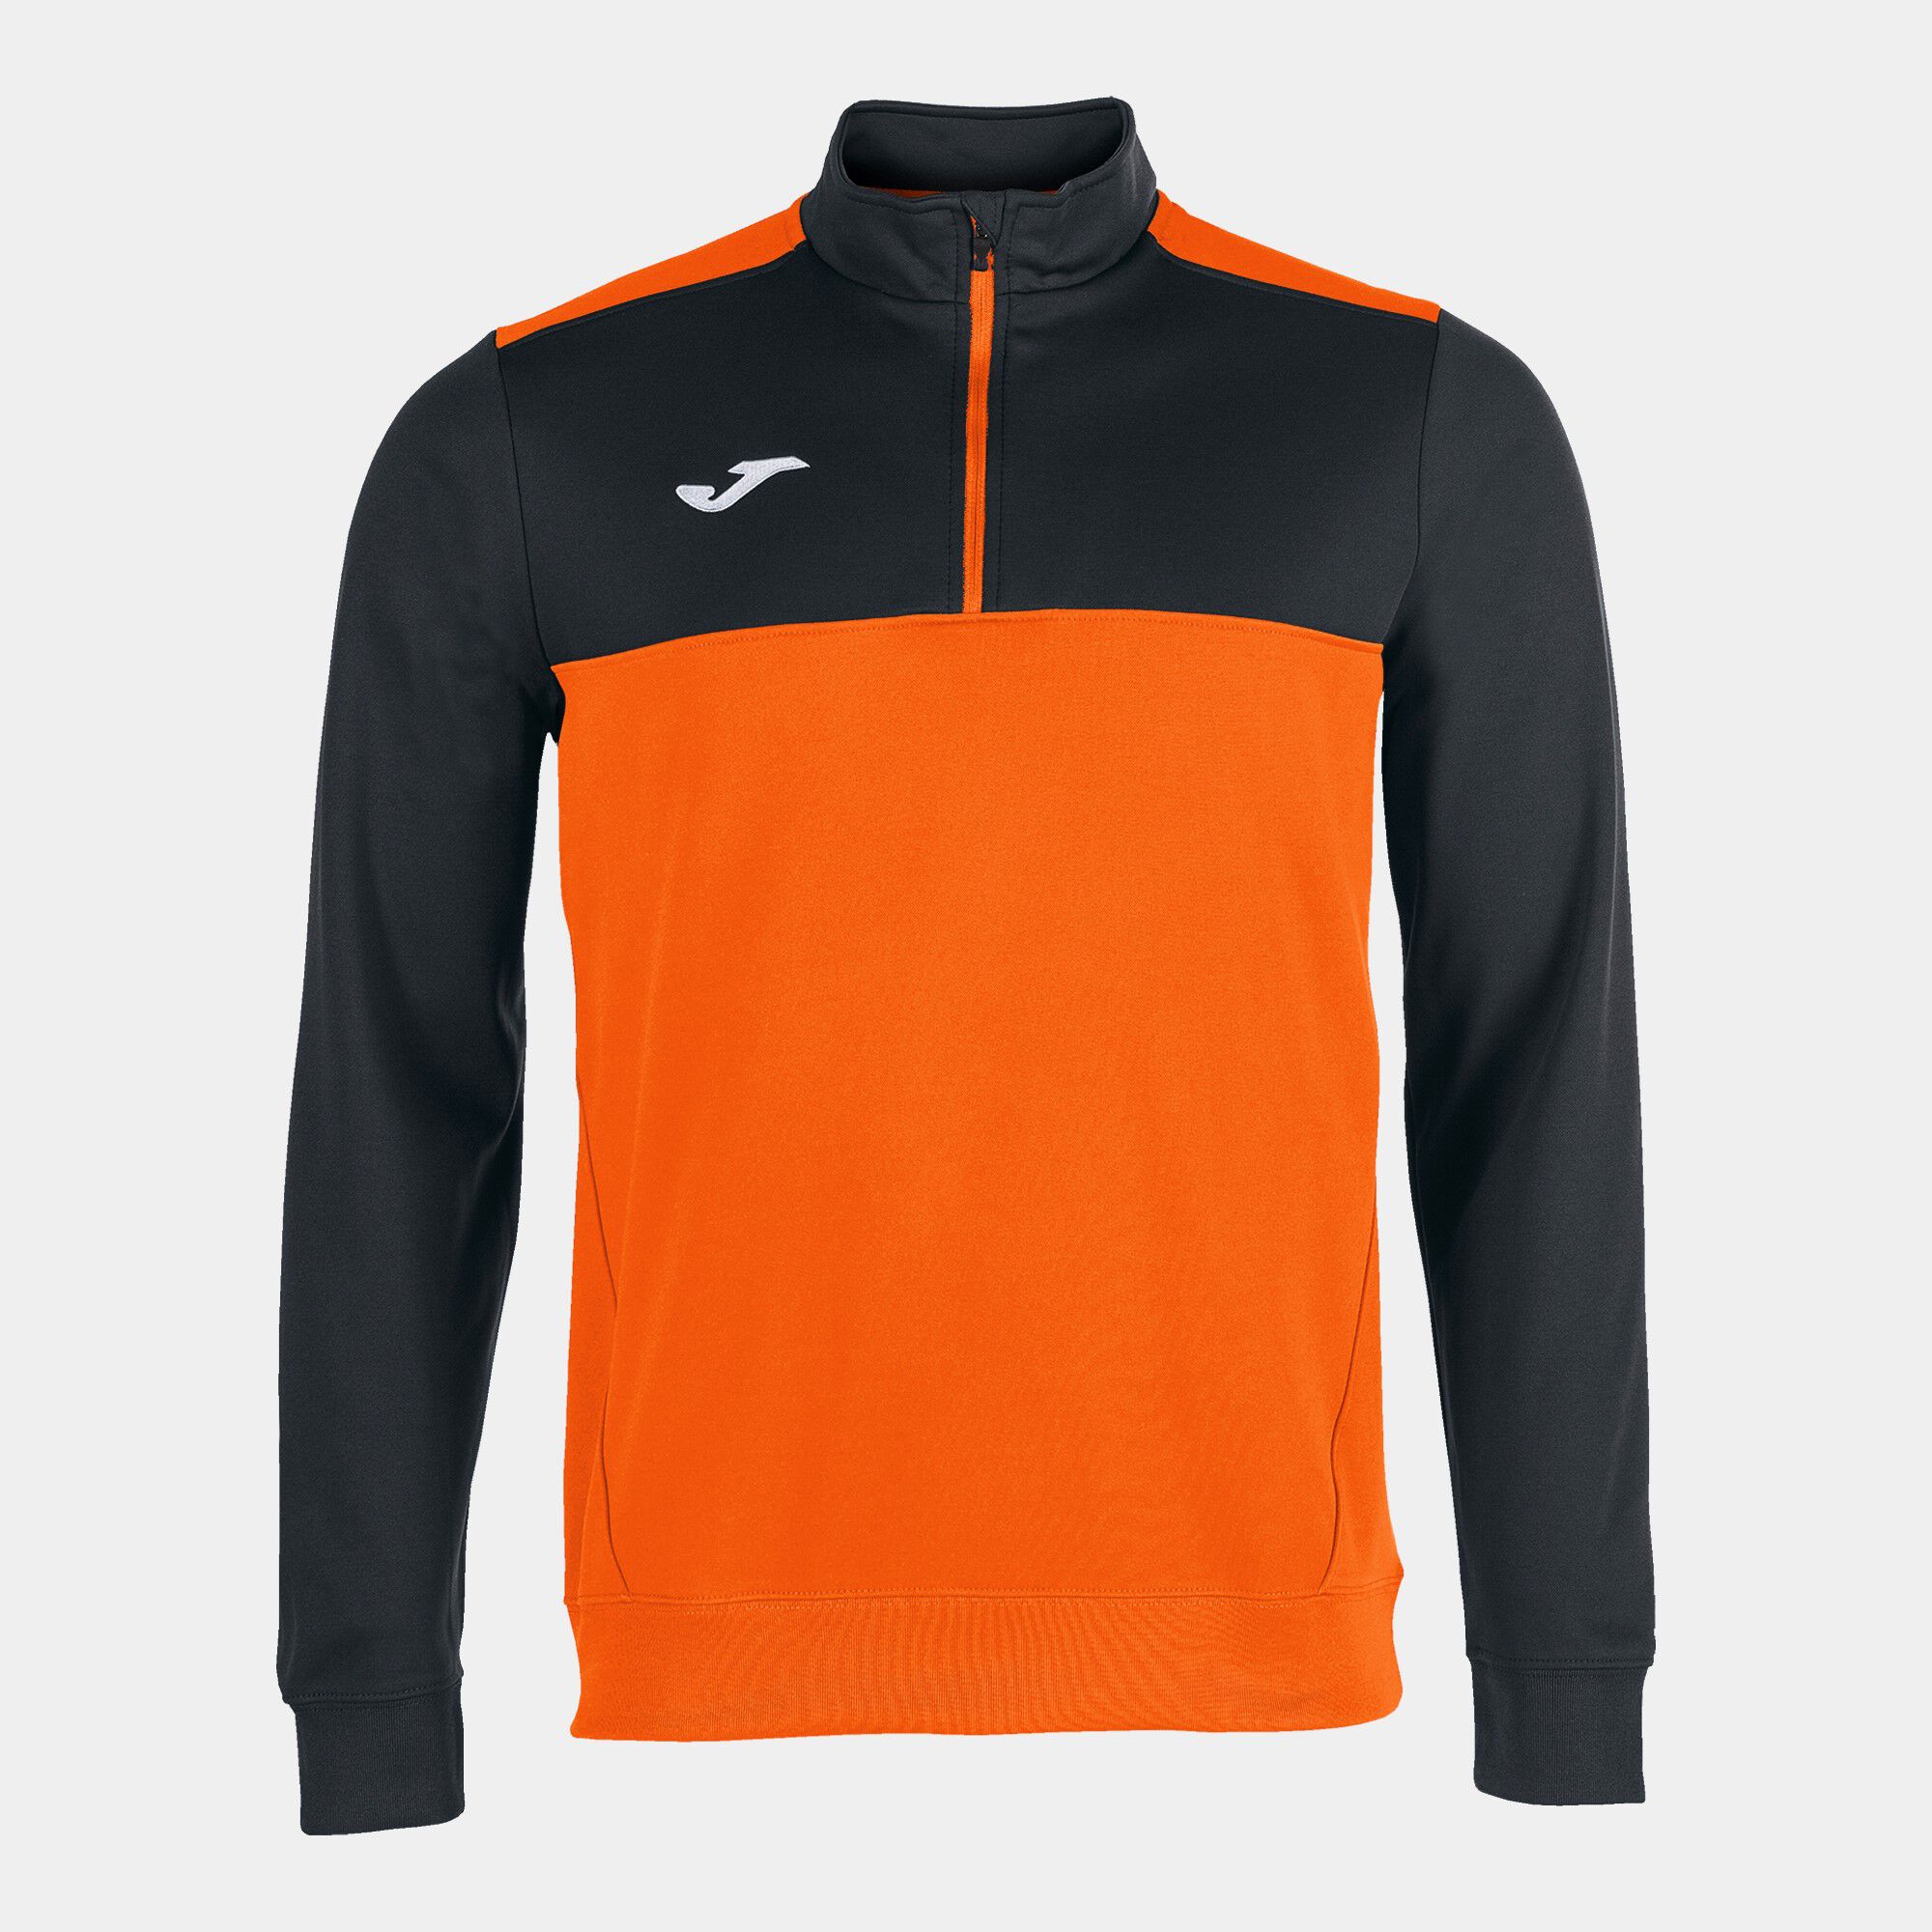 Sweatshirt man Winner orange black